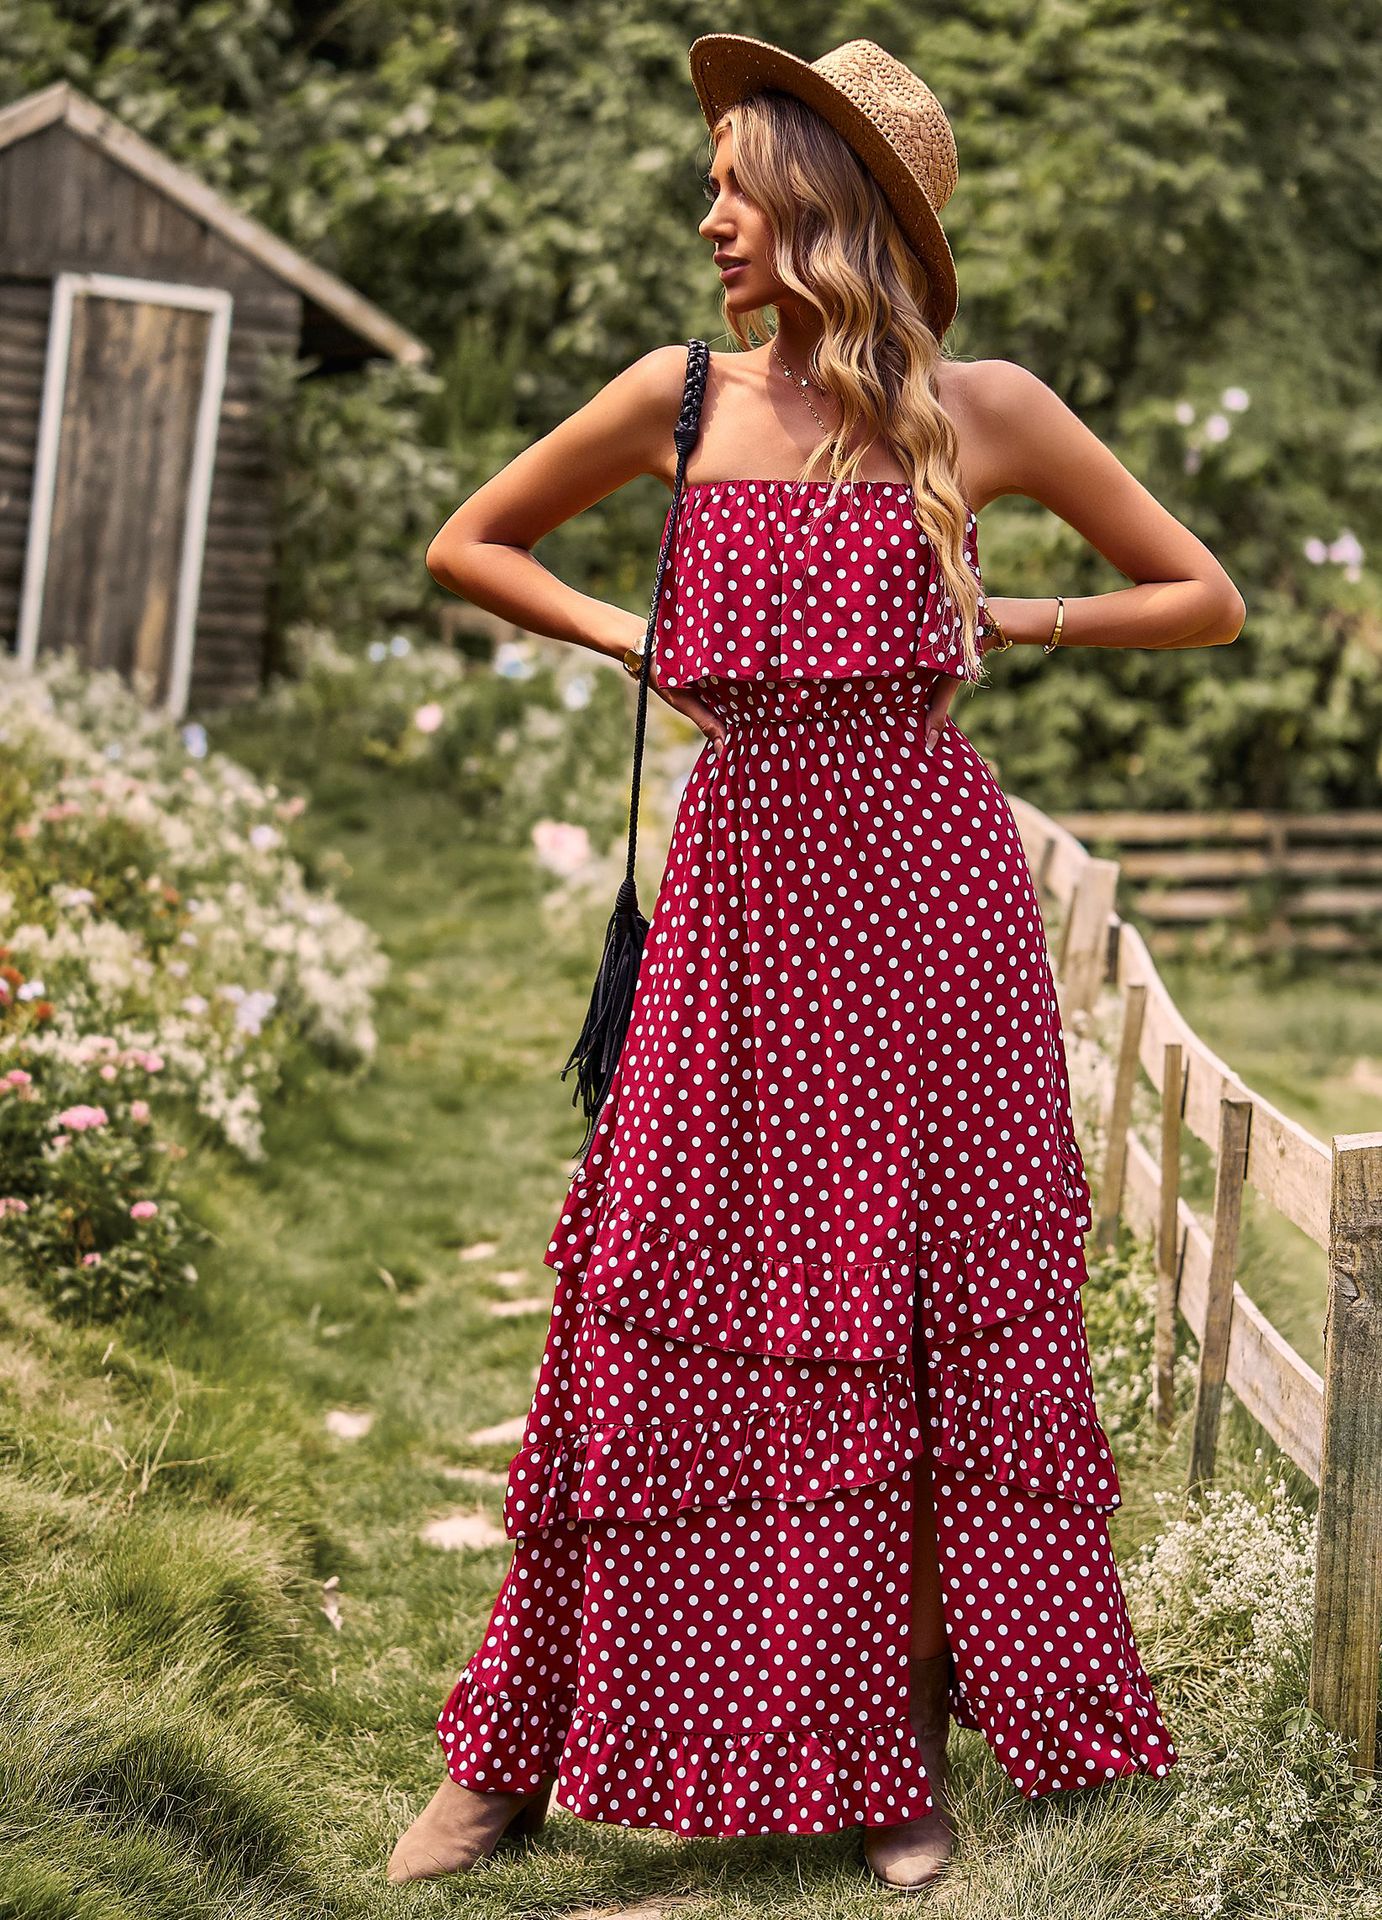 Wycnly Womens Dresses Sleeveless Tube Top Polka Dot Print, 46% OFF